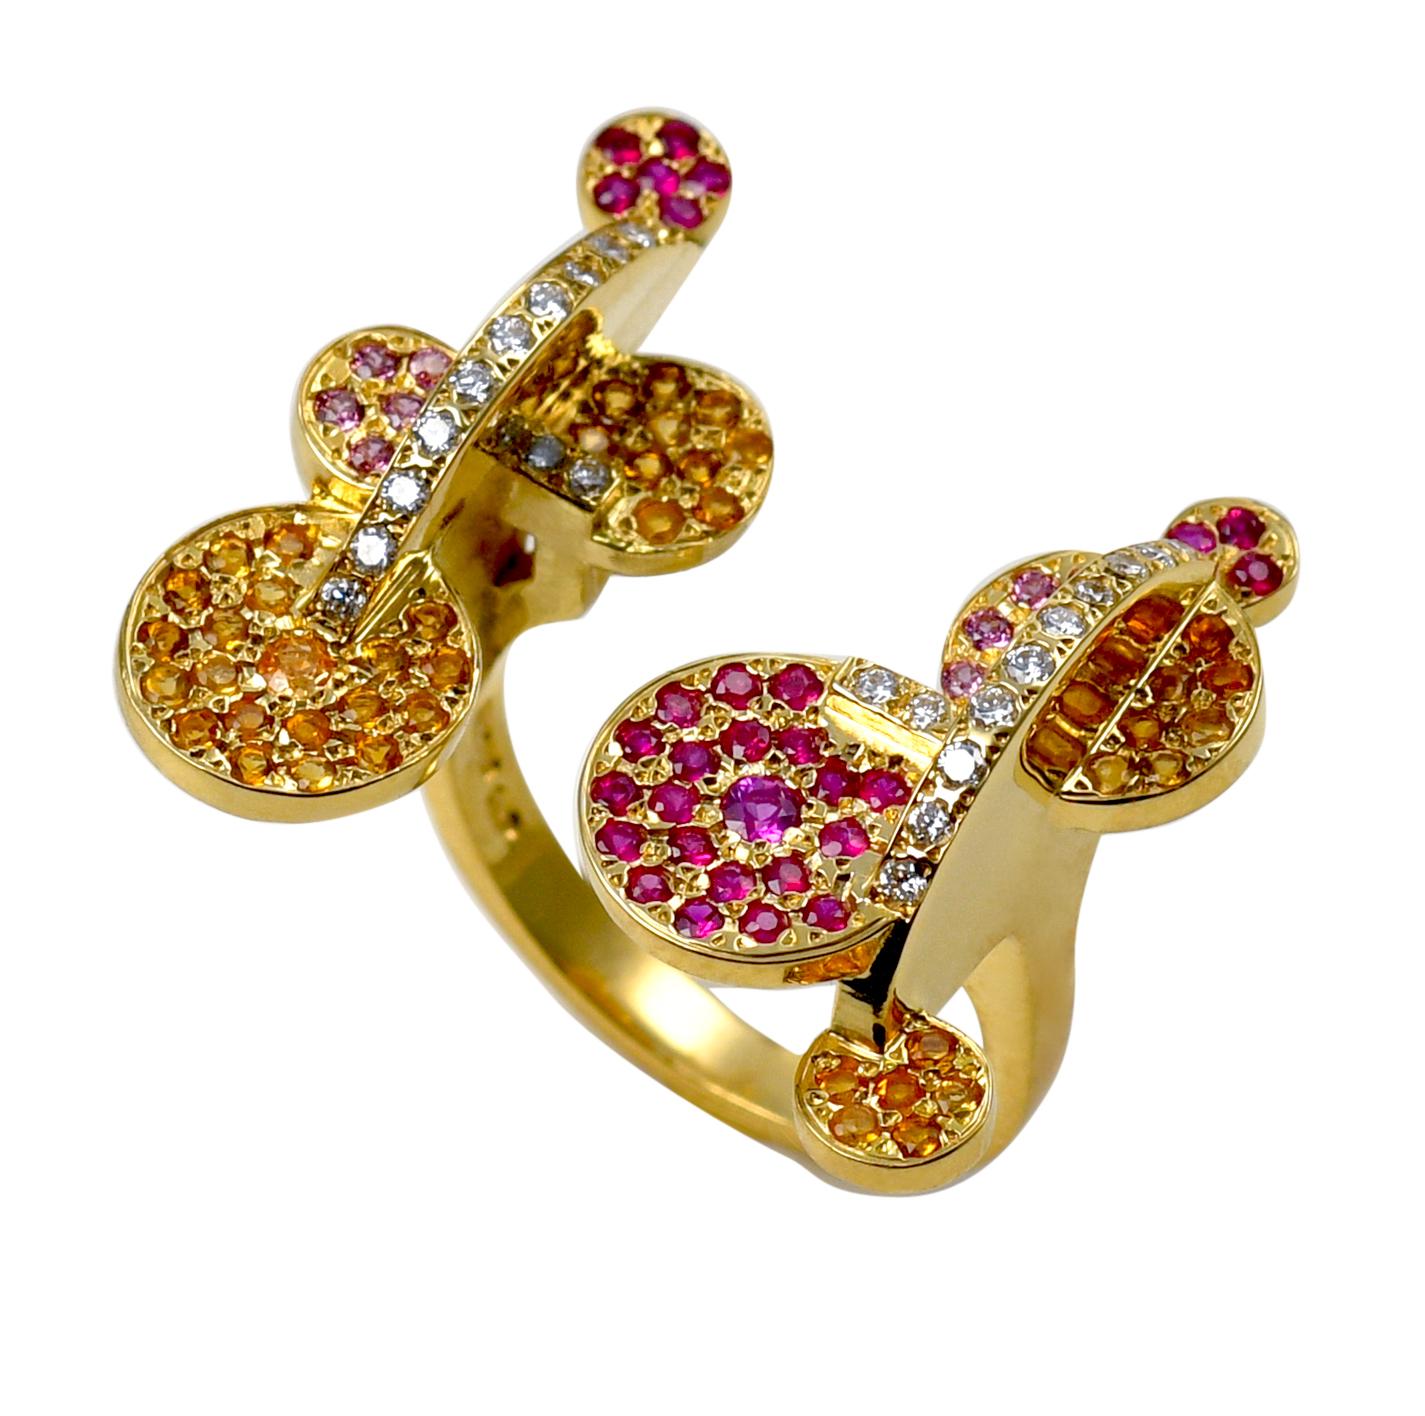 Maria Kotsoni, Contemporary 18k Gold Coloured Gemstone & Diamond Sculptural Ring For Sale